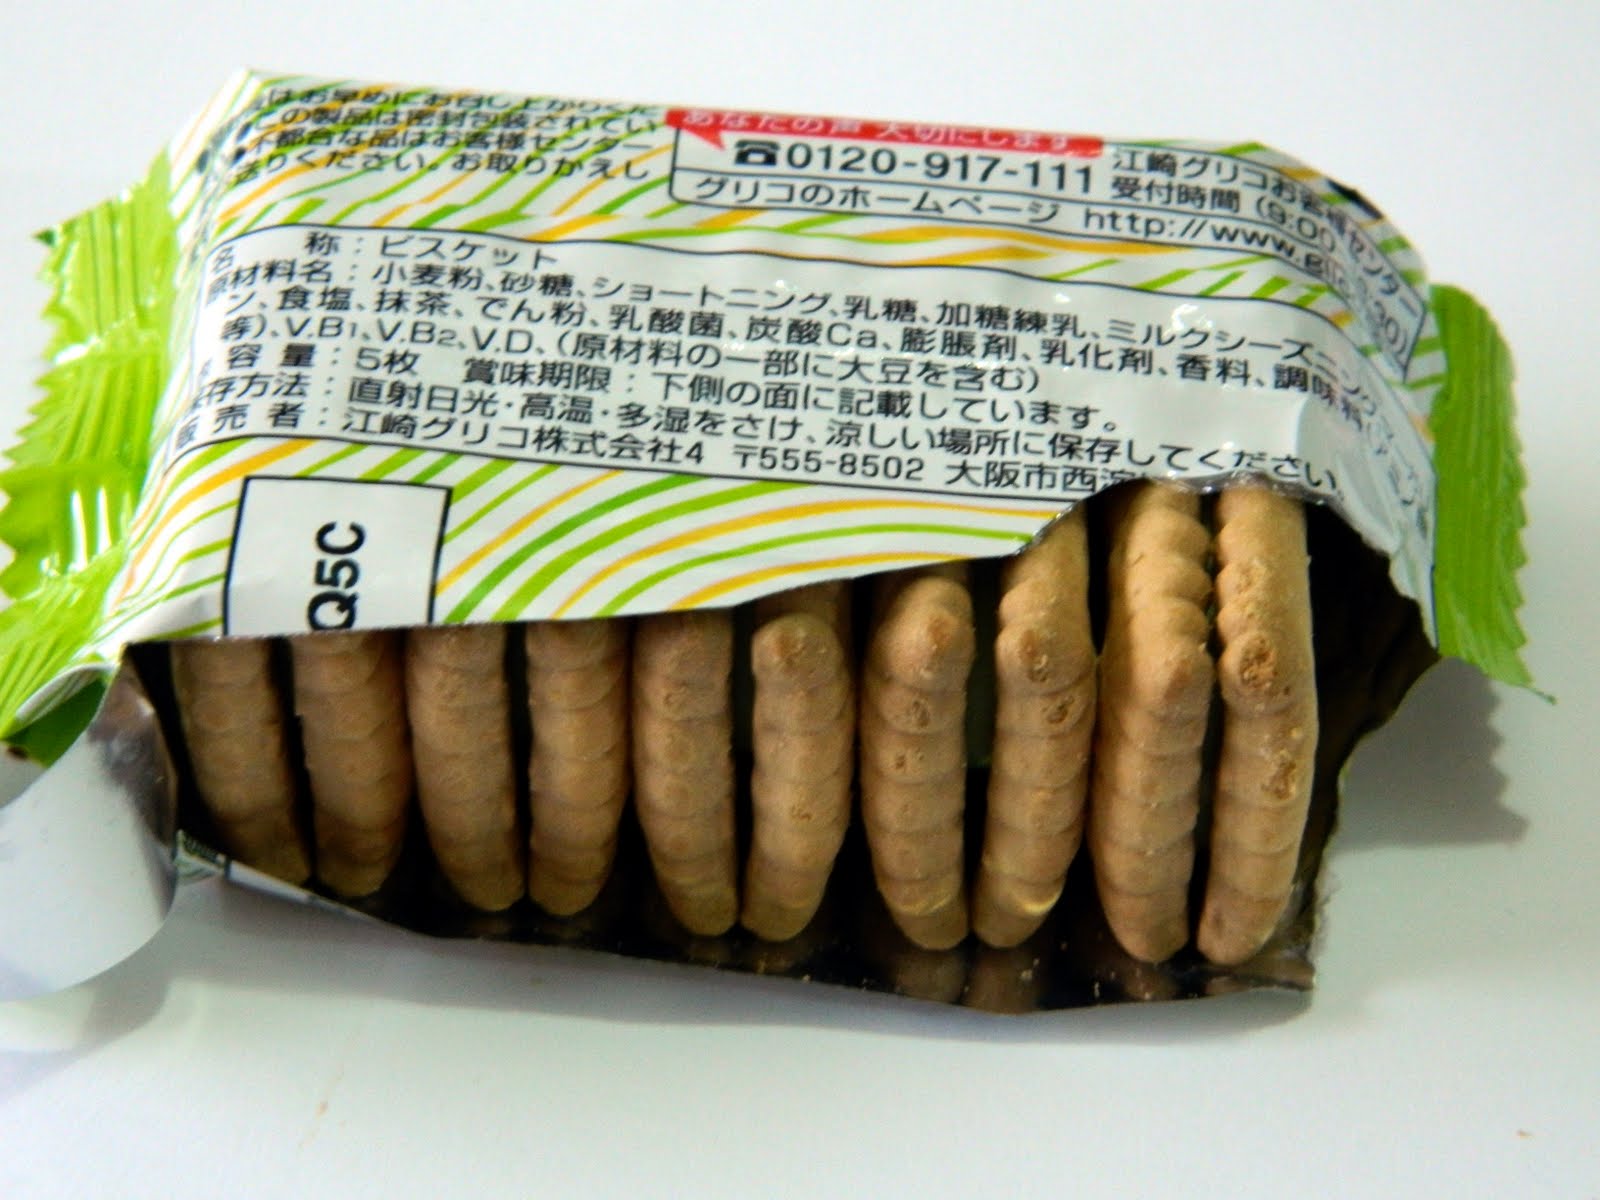 Tasty Japan: Glico Bisco Matcha Milk グリコ ビスコ 抹茶ミルク